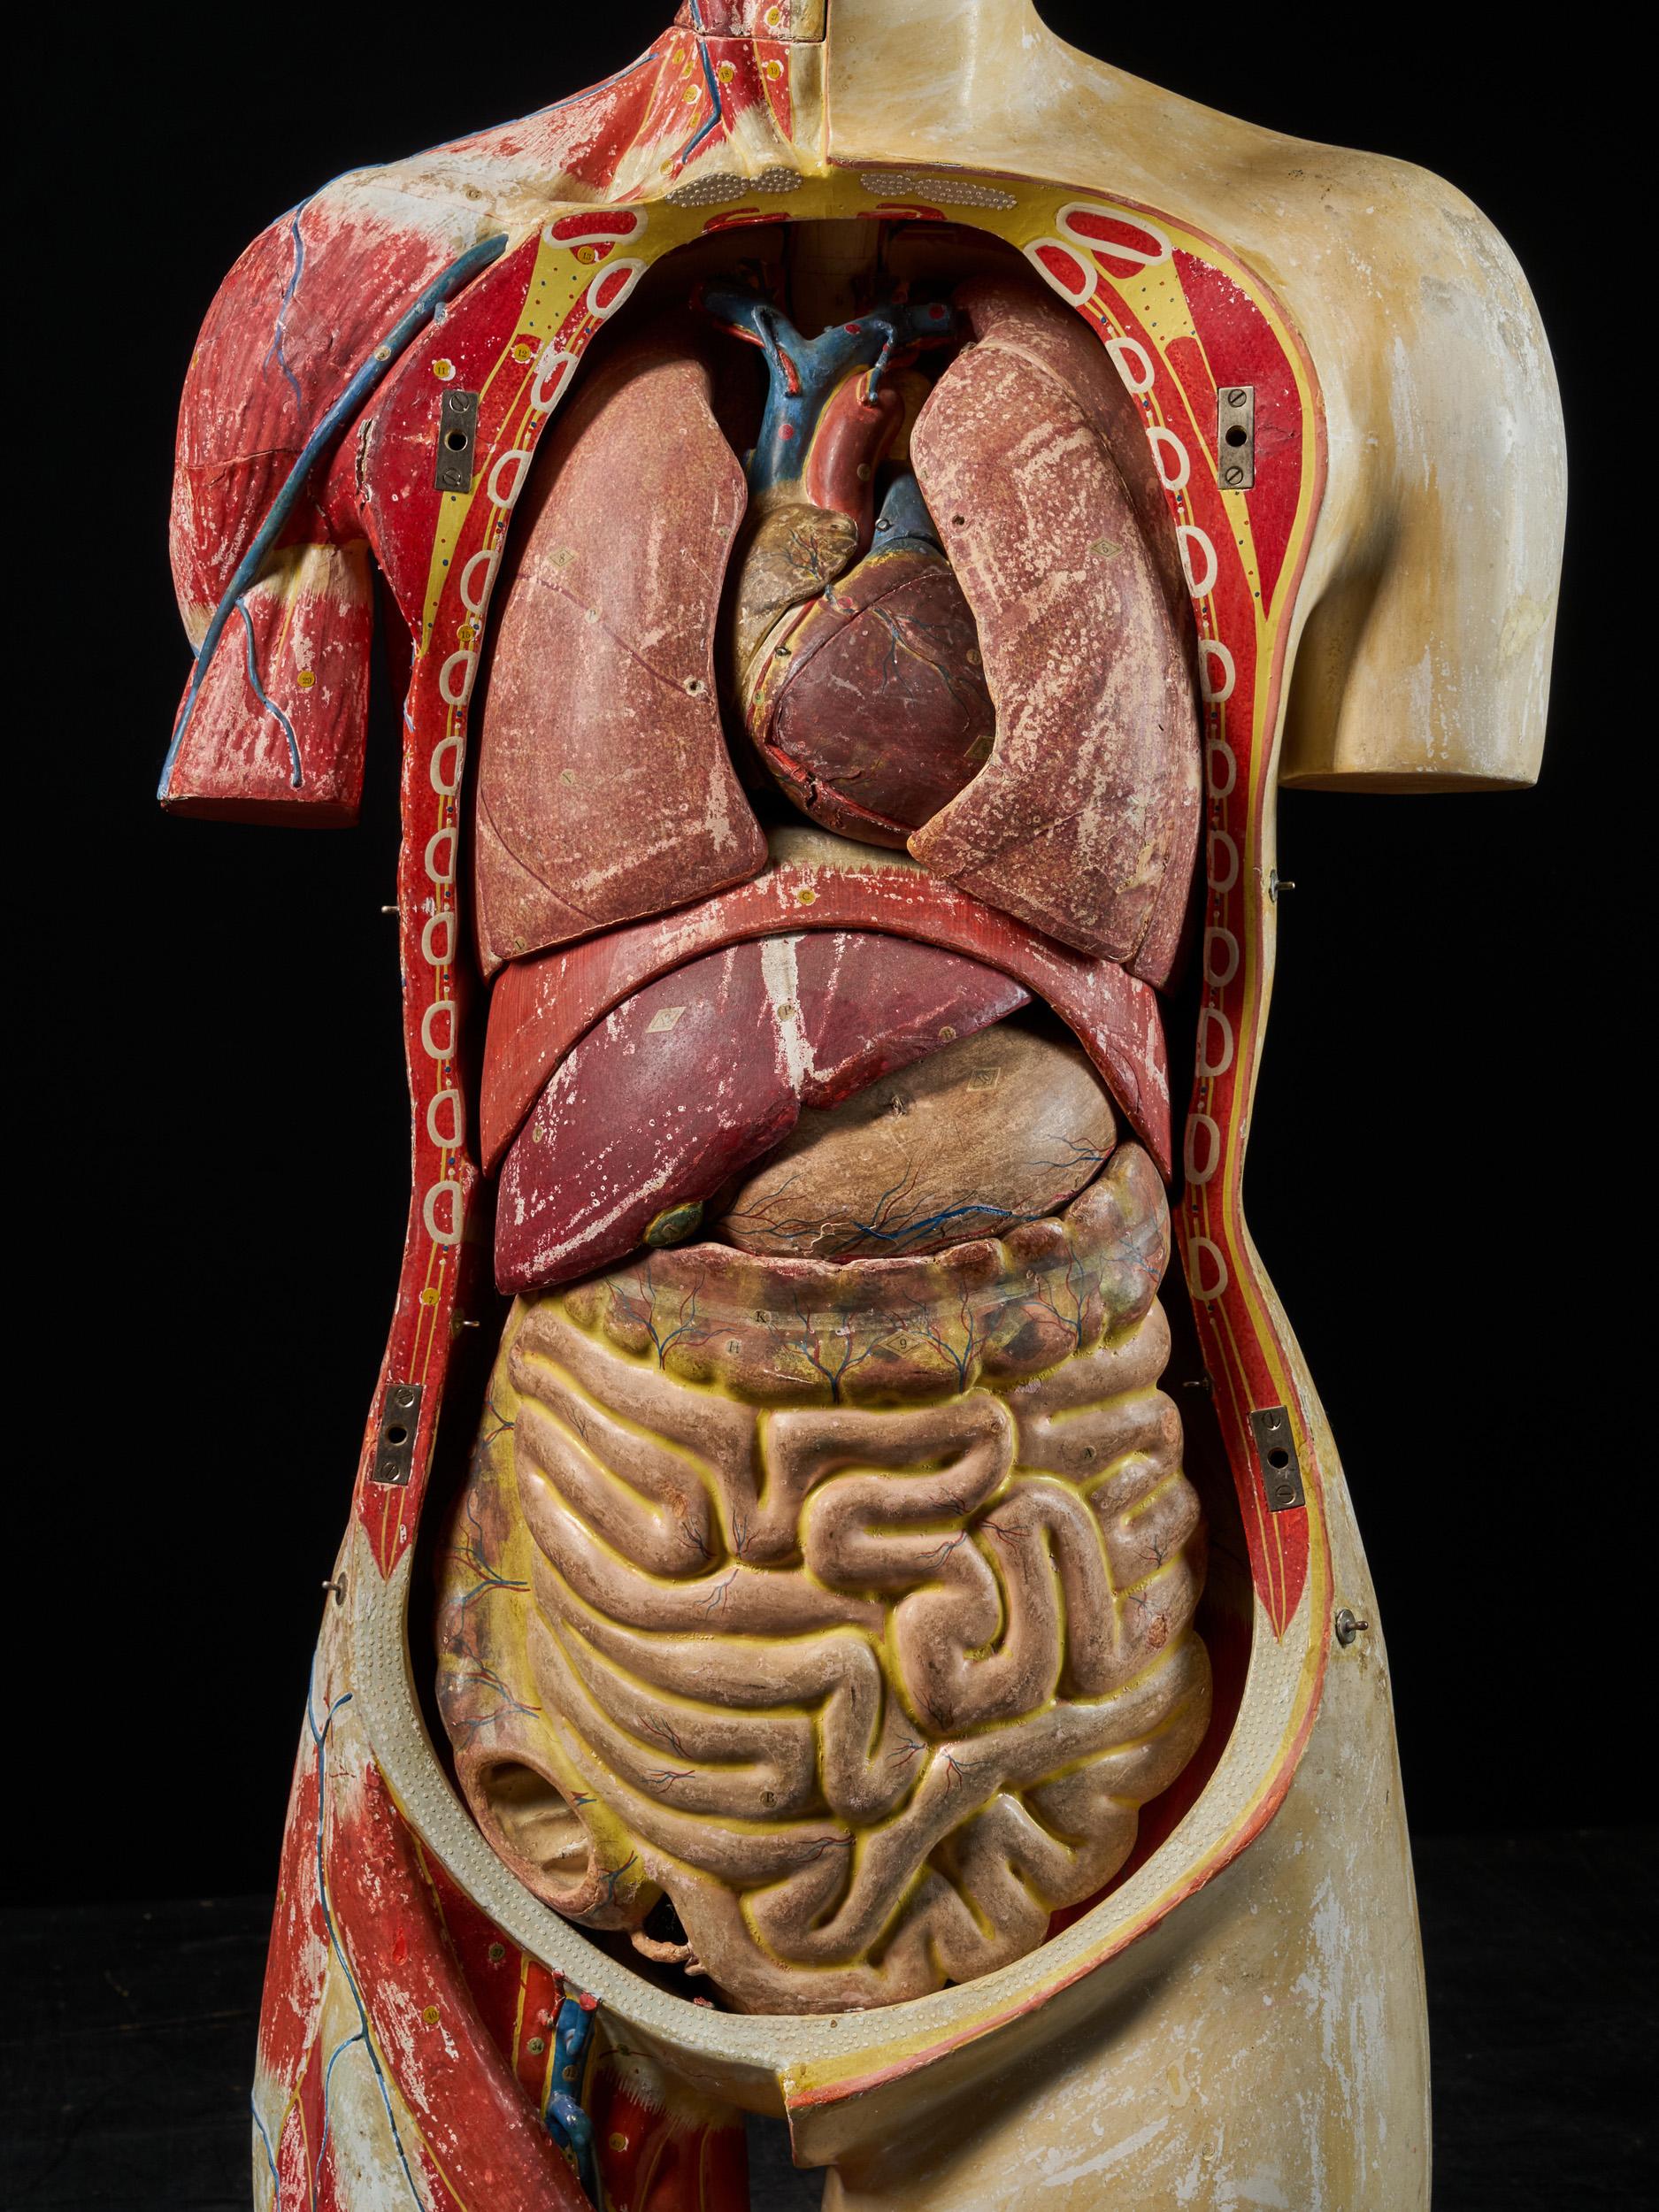 Japanese Female Life-Size Anatomical Ecorche Torso Model, Shimadzu Corp